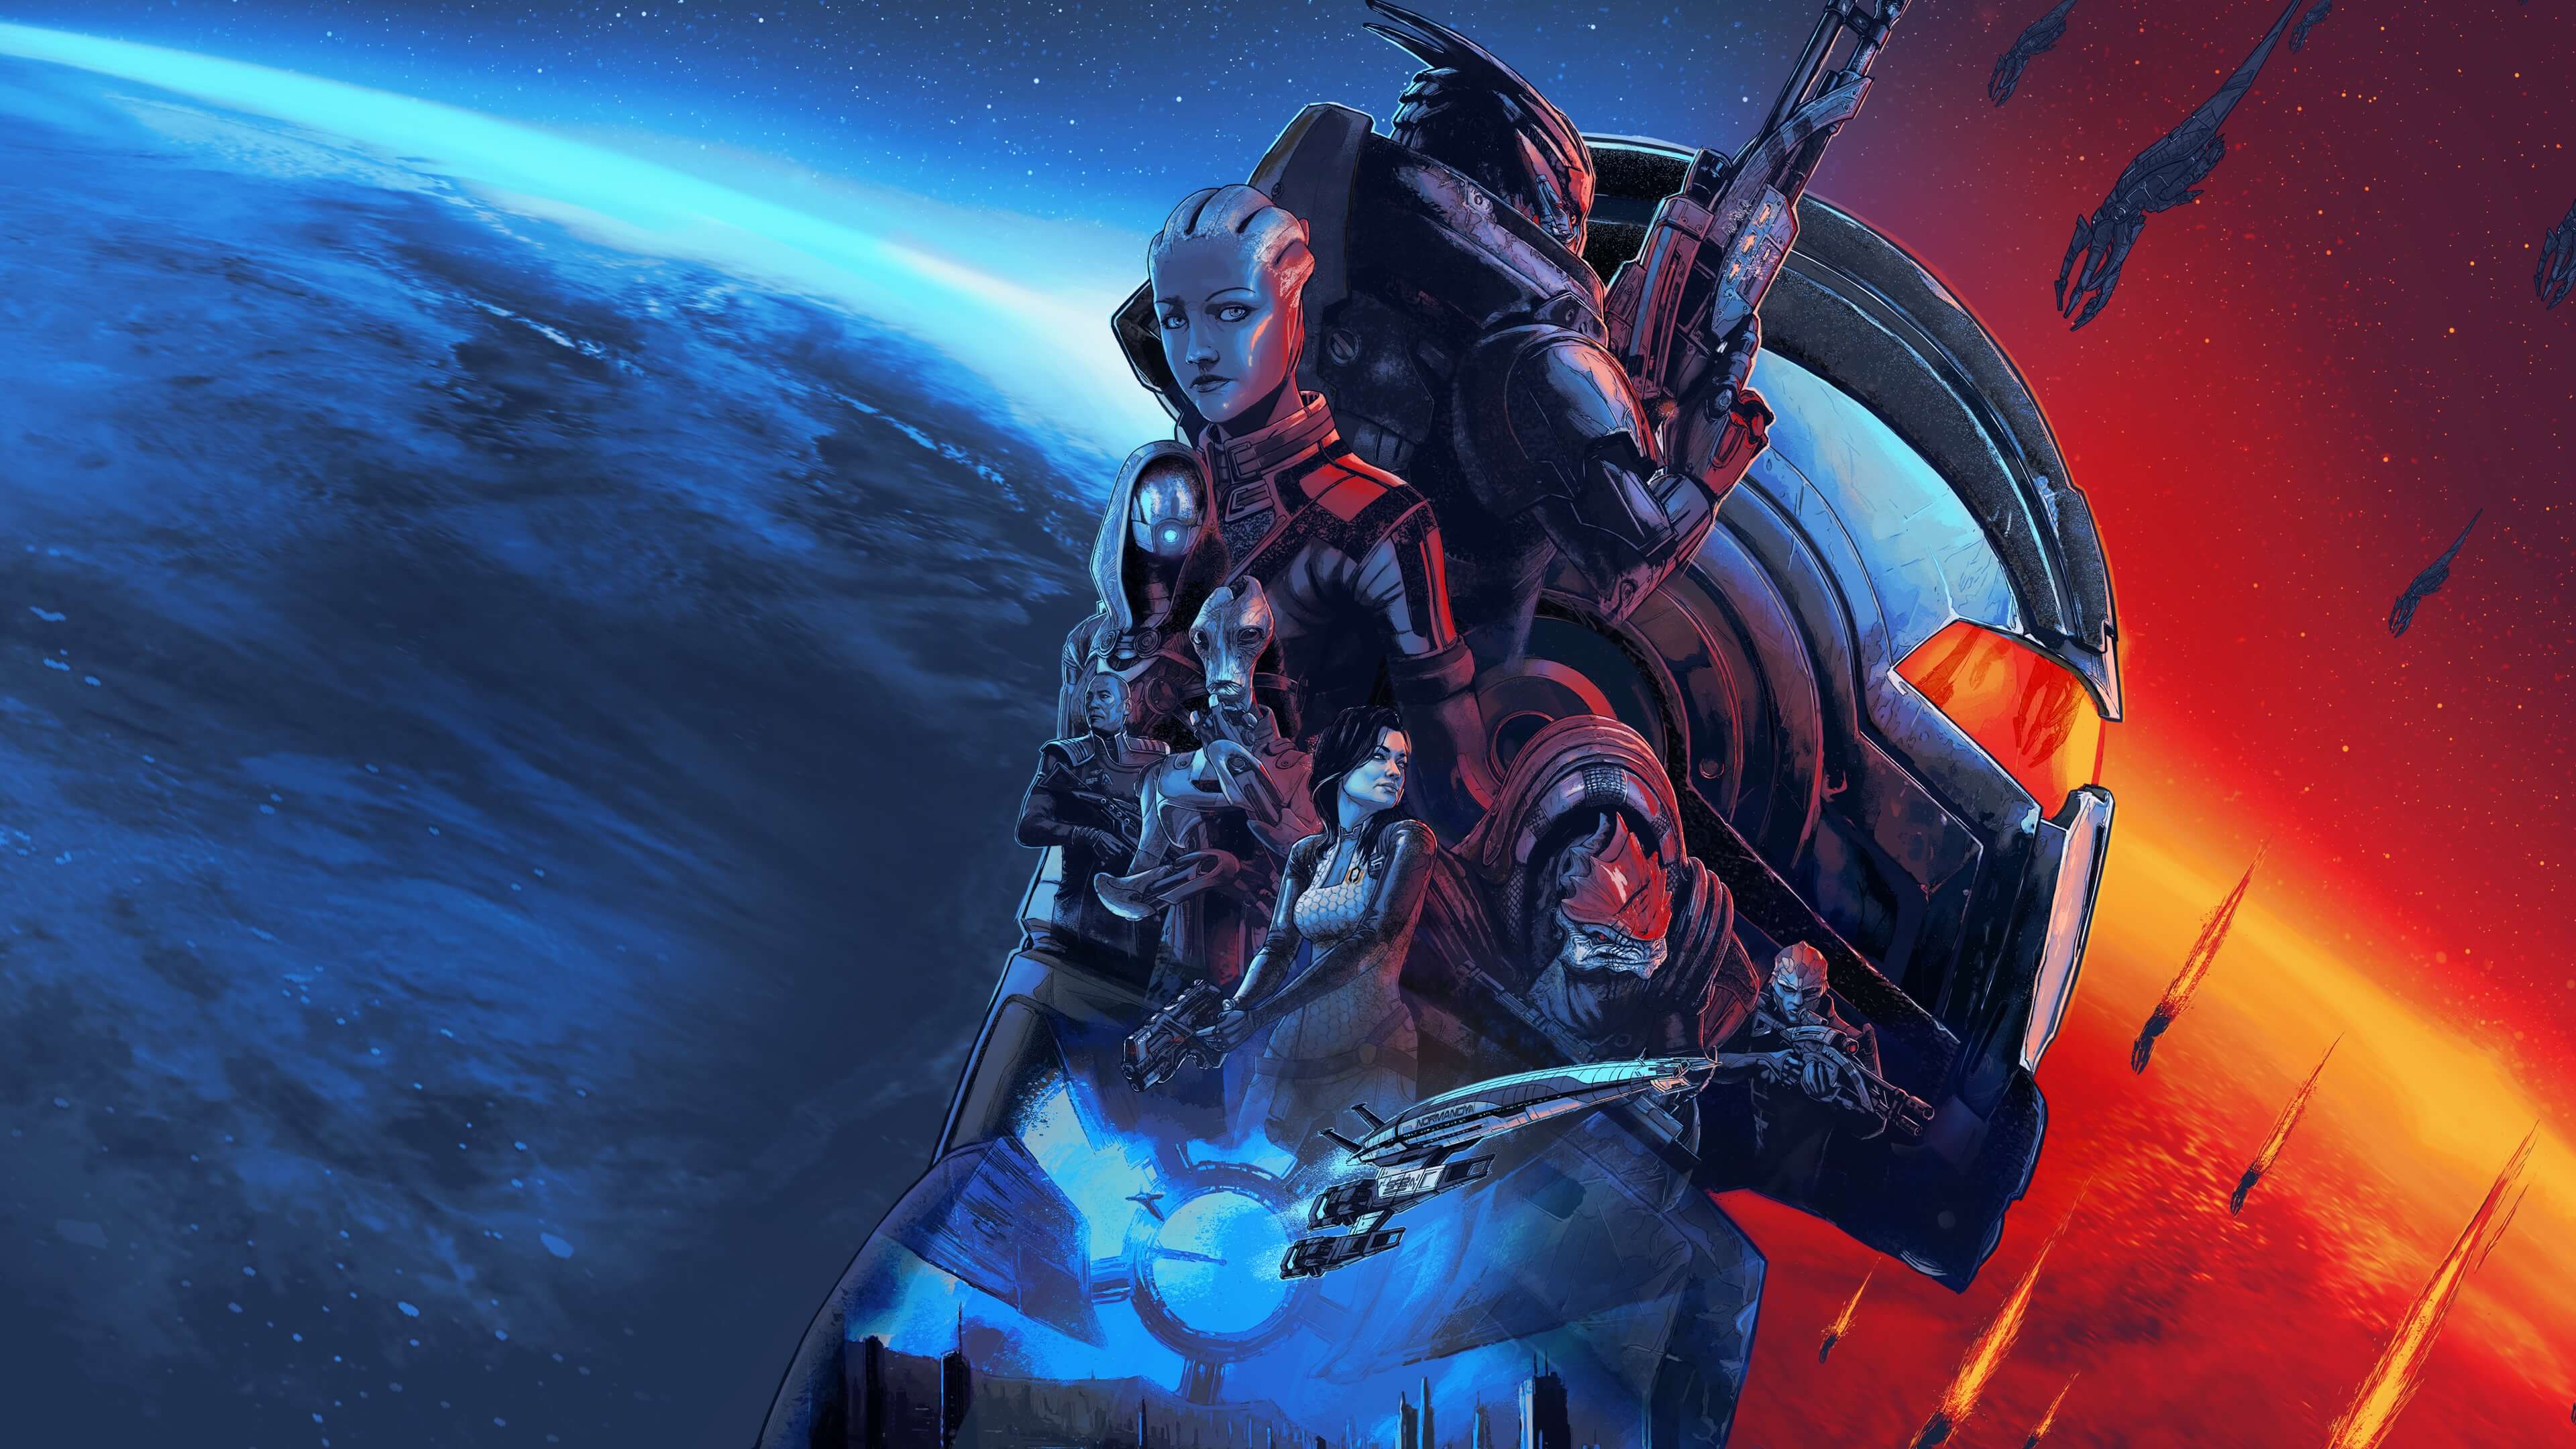 Mass Effect™ издание Legendary download the new for ios